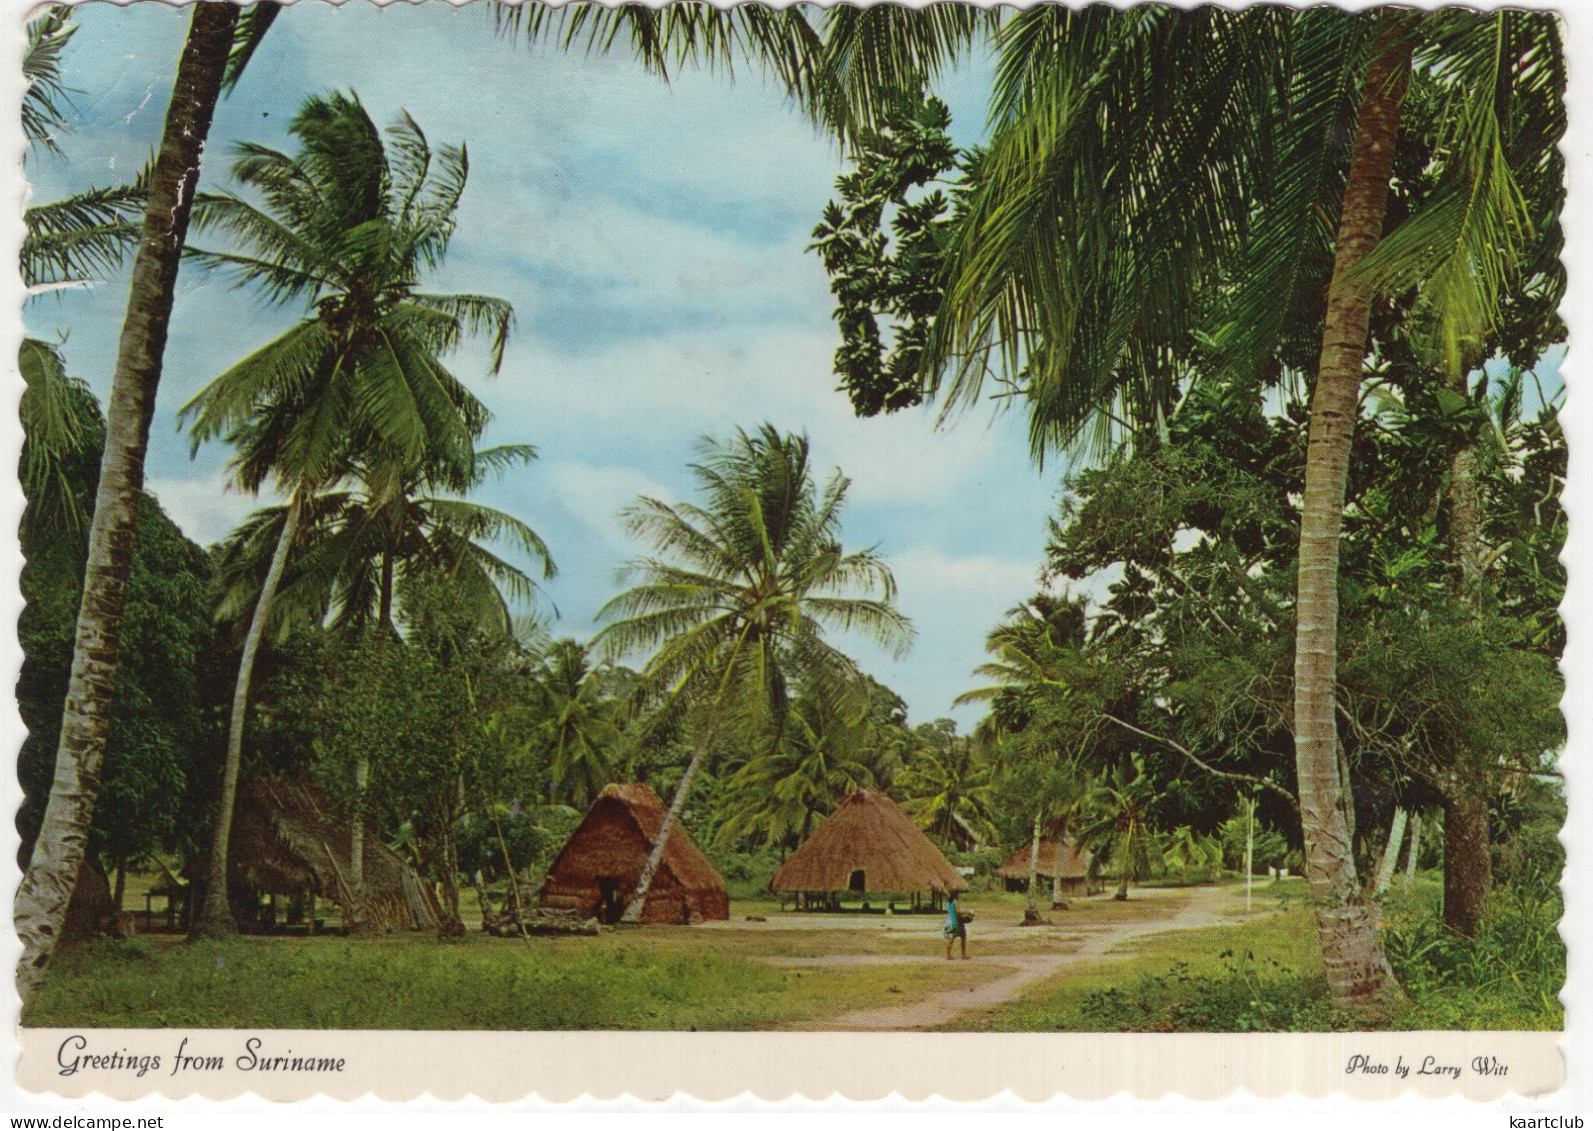 Greetings From Suriname: The Carib Village Of Bigi Ston-Marowijne District / Indianendorp Bigi Ston A/d Marowijne Rivier - Surinam